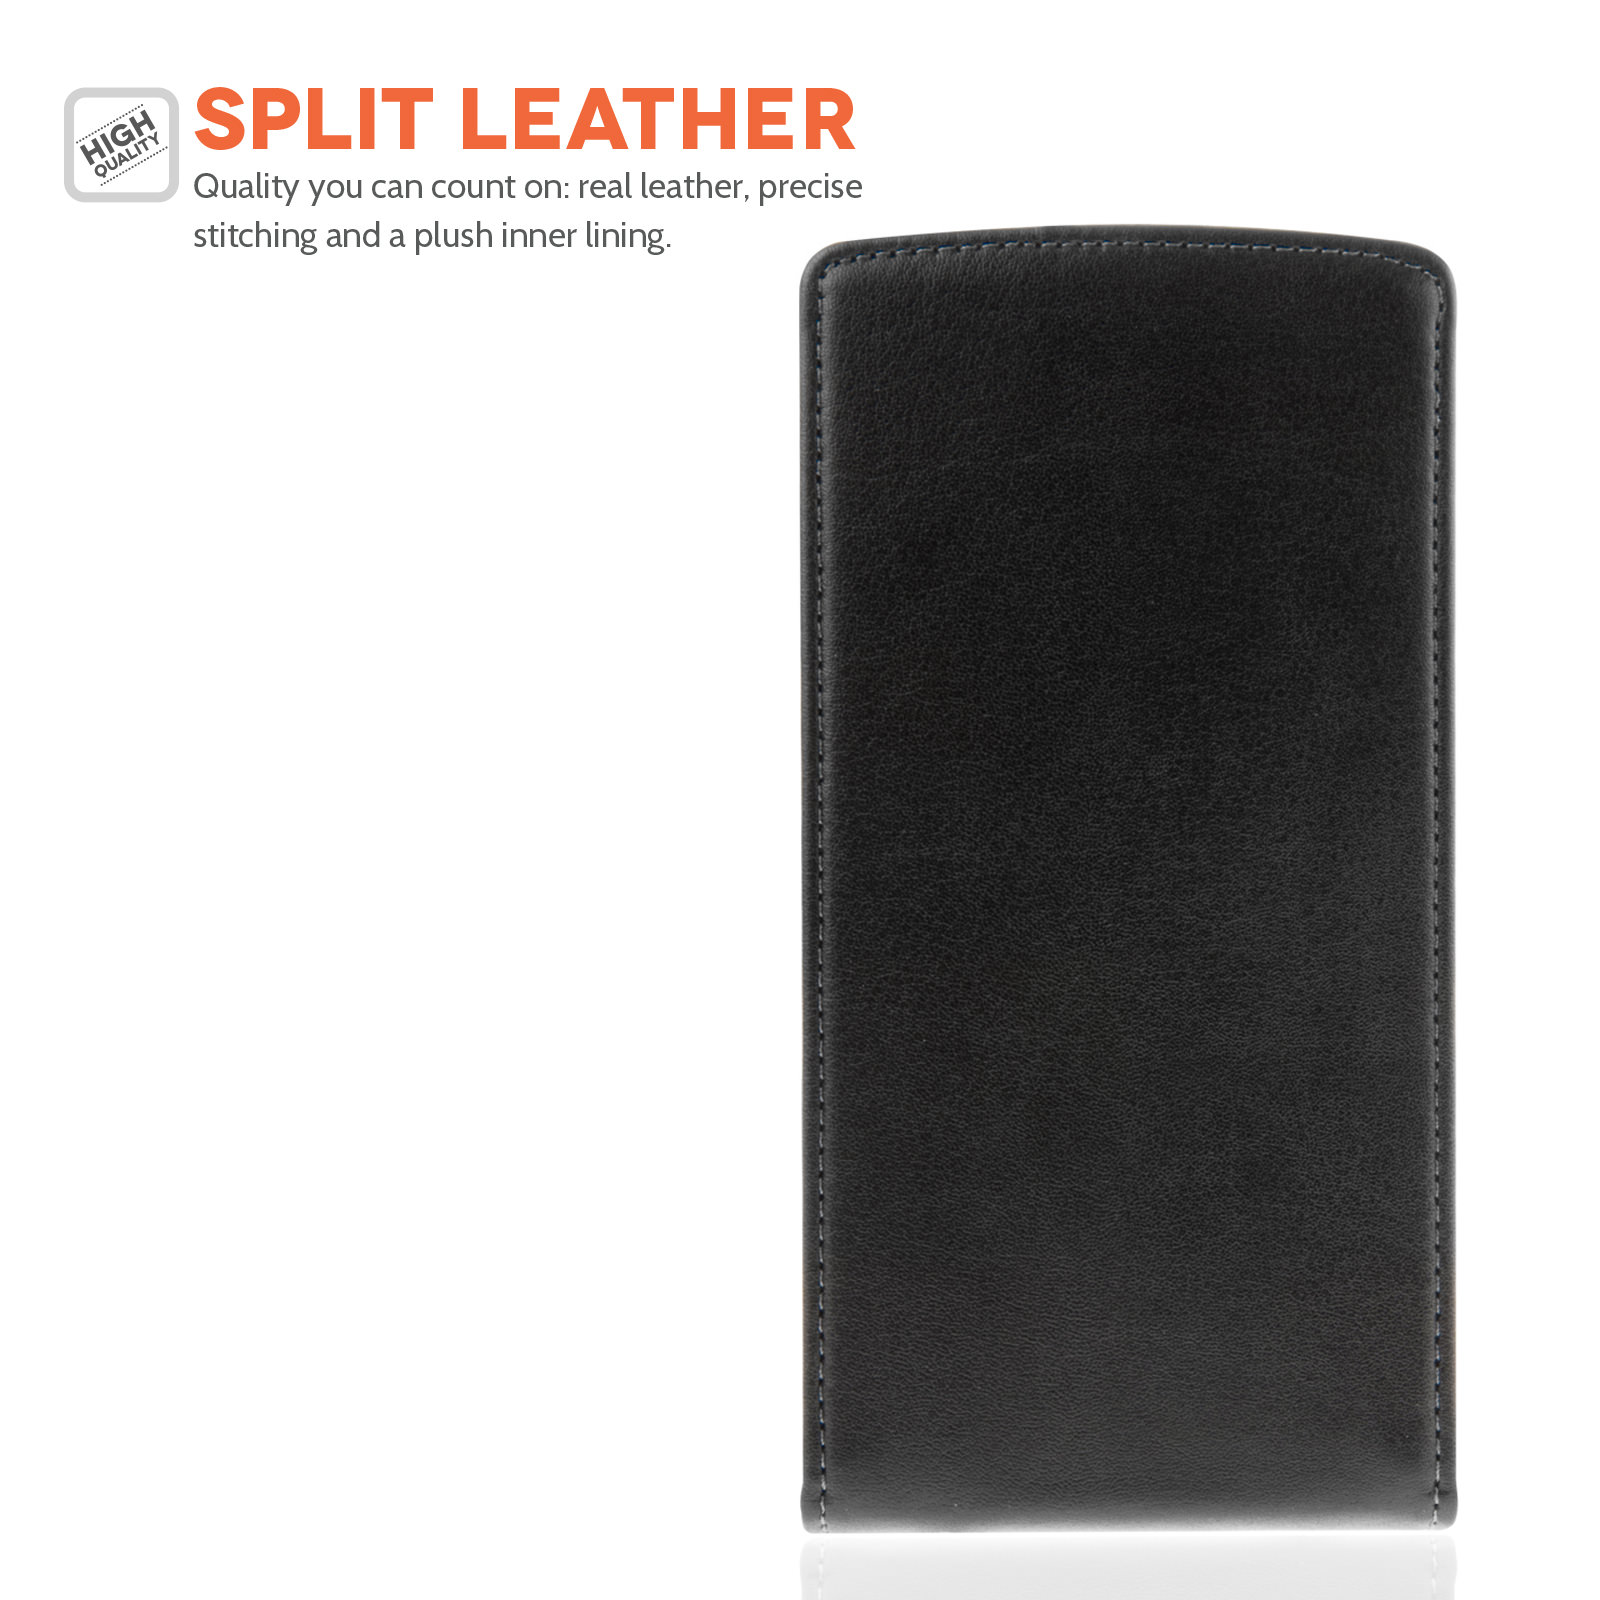 Caseflex LG G4 Real Leather Flip Case - Black